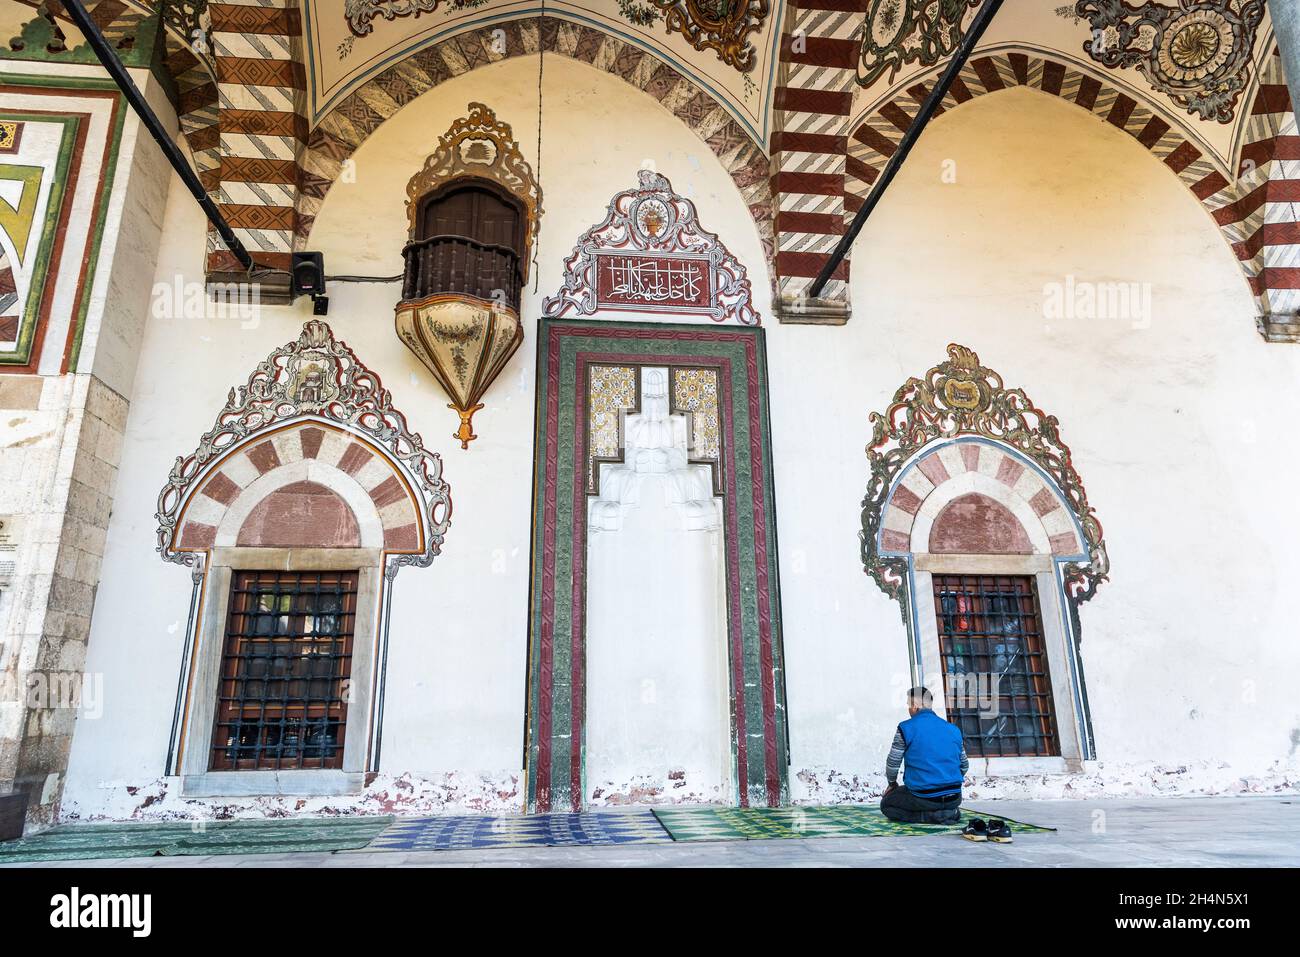 Manisa, Turquie – 8 novembre 2020.Arcade de la mosquée Hafsa Sultan à Manisa.La mosquée date de 1523.Vue avec un mihrab, décorations, incri arabe Banque D'Images